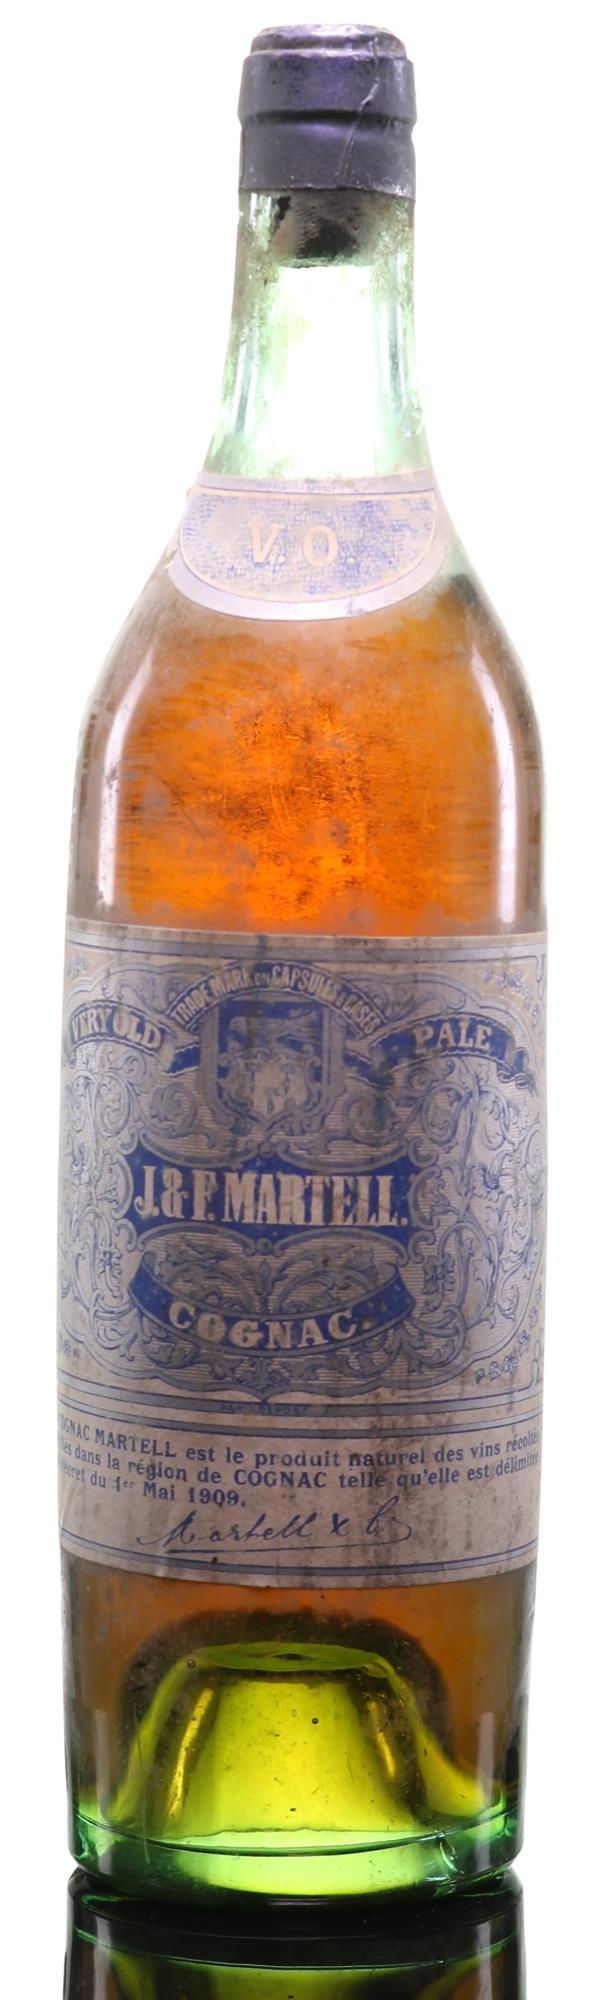 Martell Very Old Pale Cognac 1909-1928 (3 Stars) - Rue Pinard